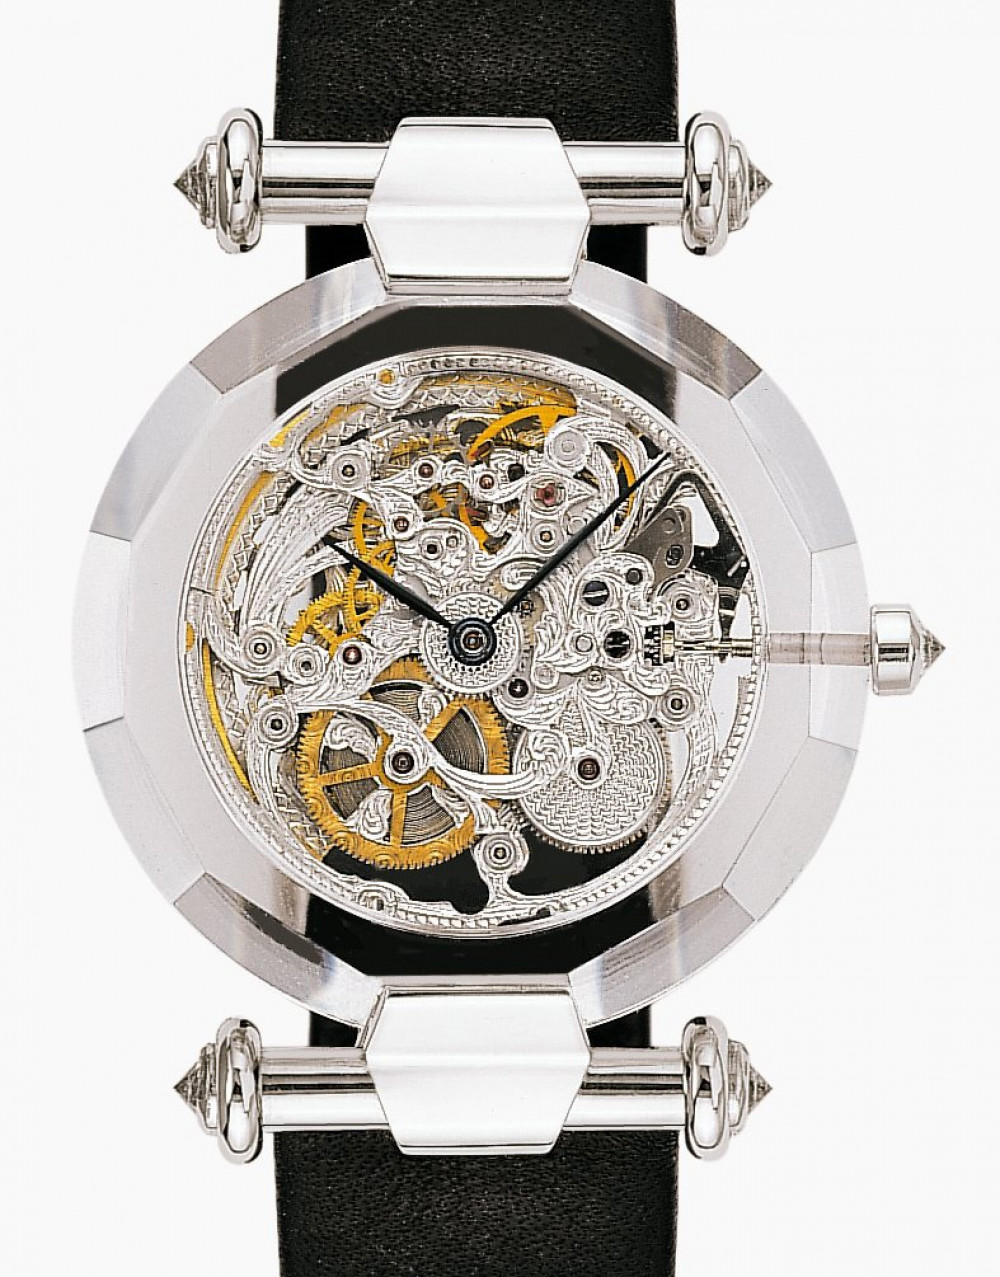 Zegarek firmy Nivrel, model Saphir